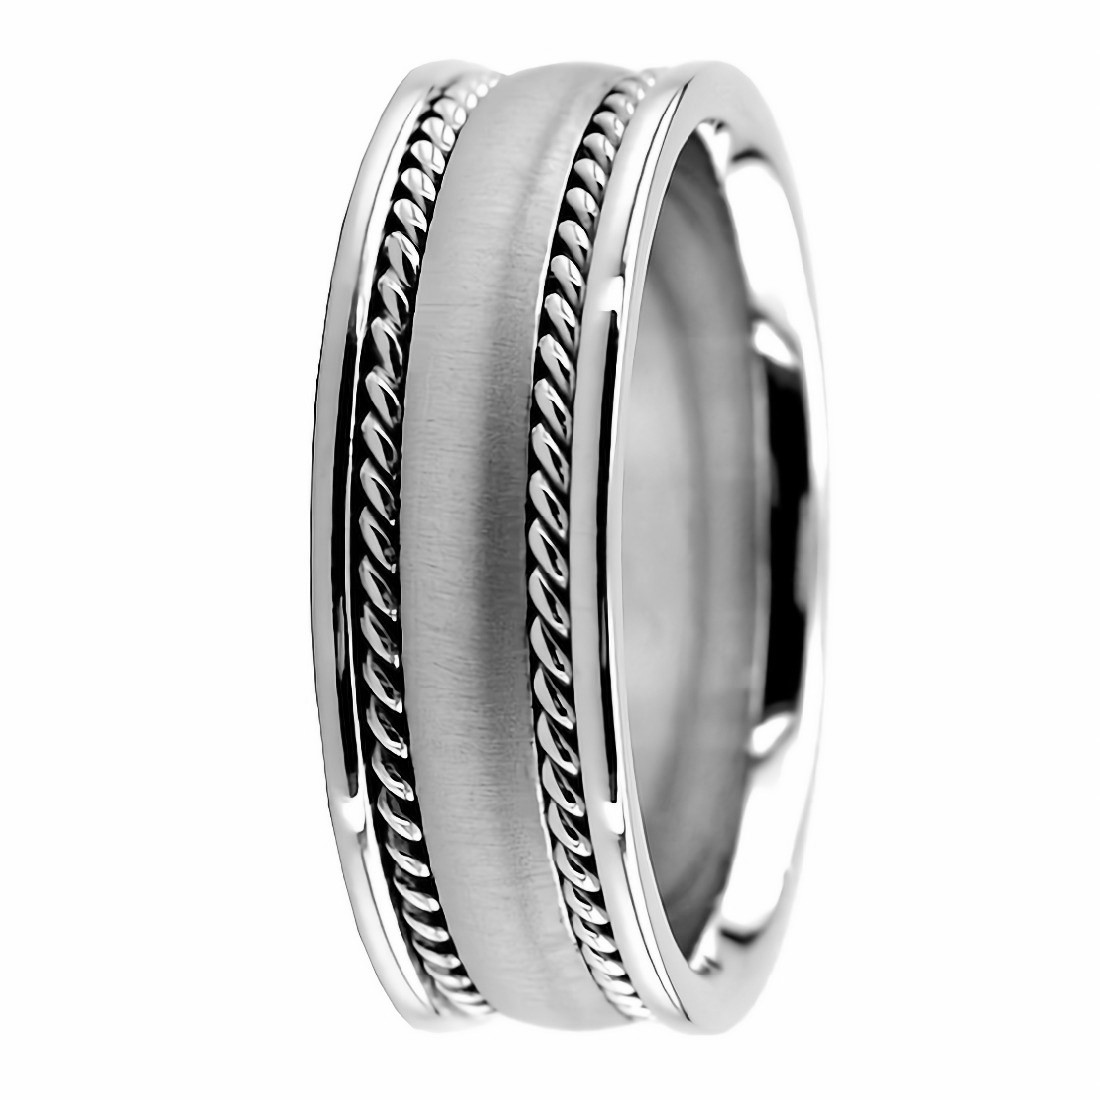 Handmade 950 Platinum Wedding Band Ring Comfort Fit